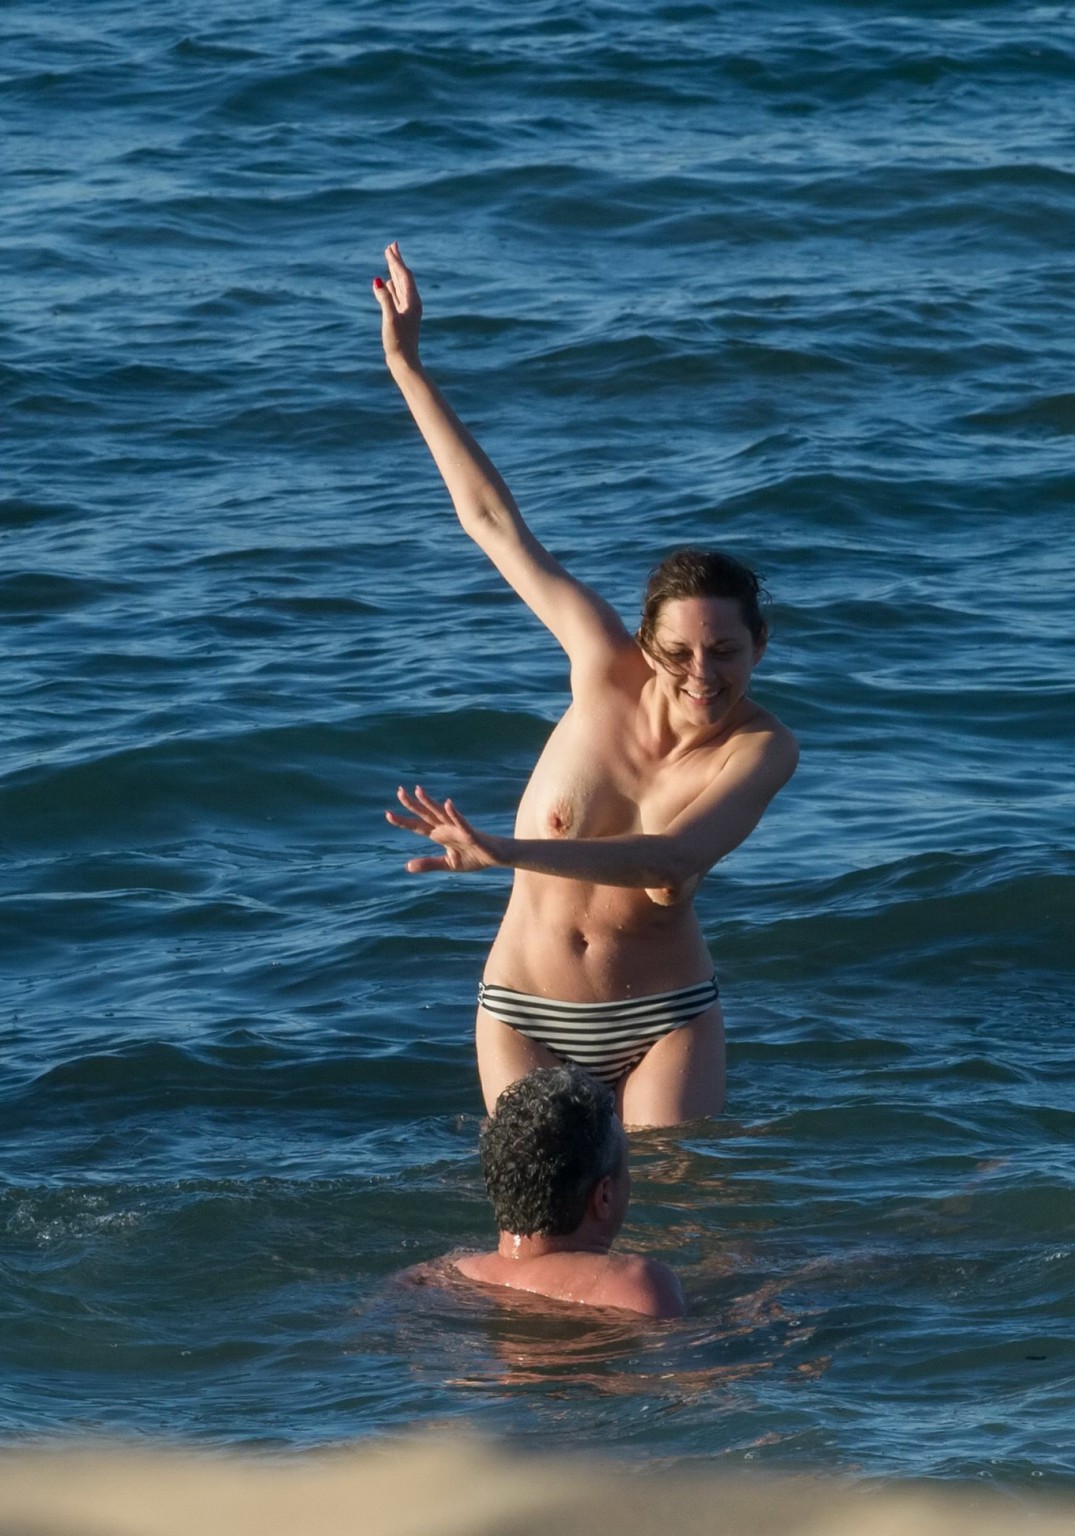 Marion Cotillard swimming topless at the beach #75141694